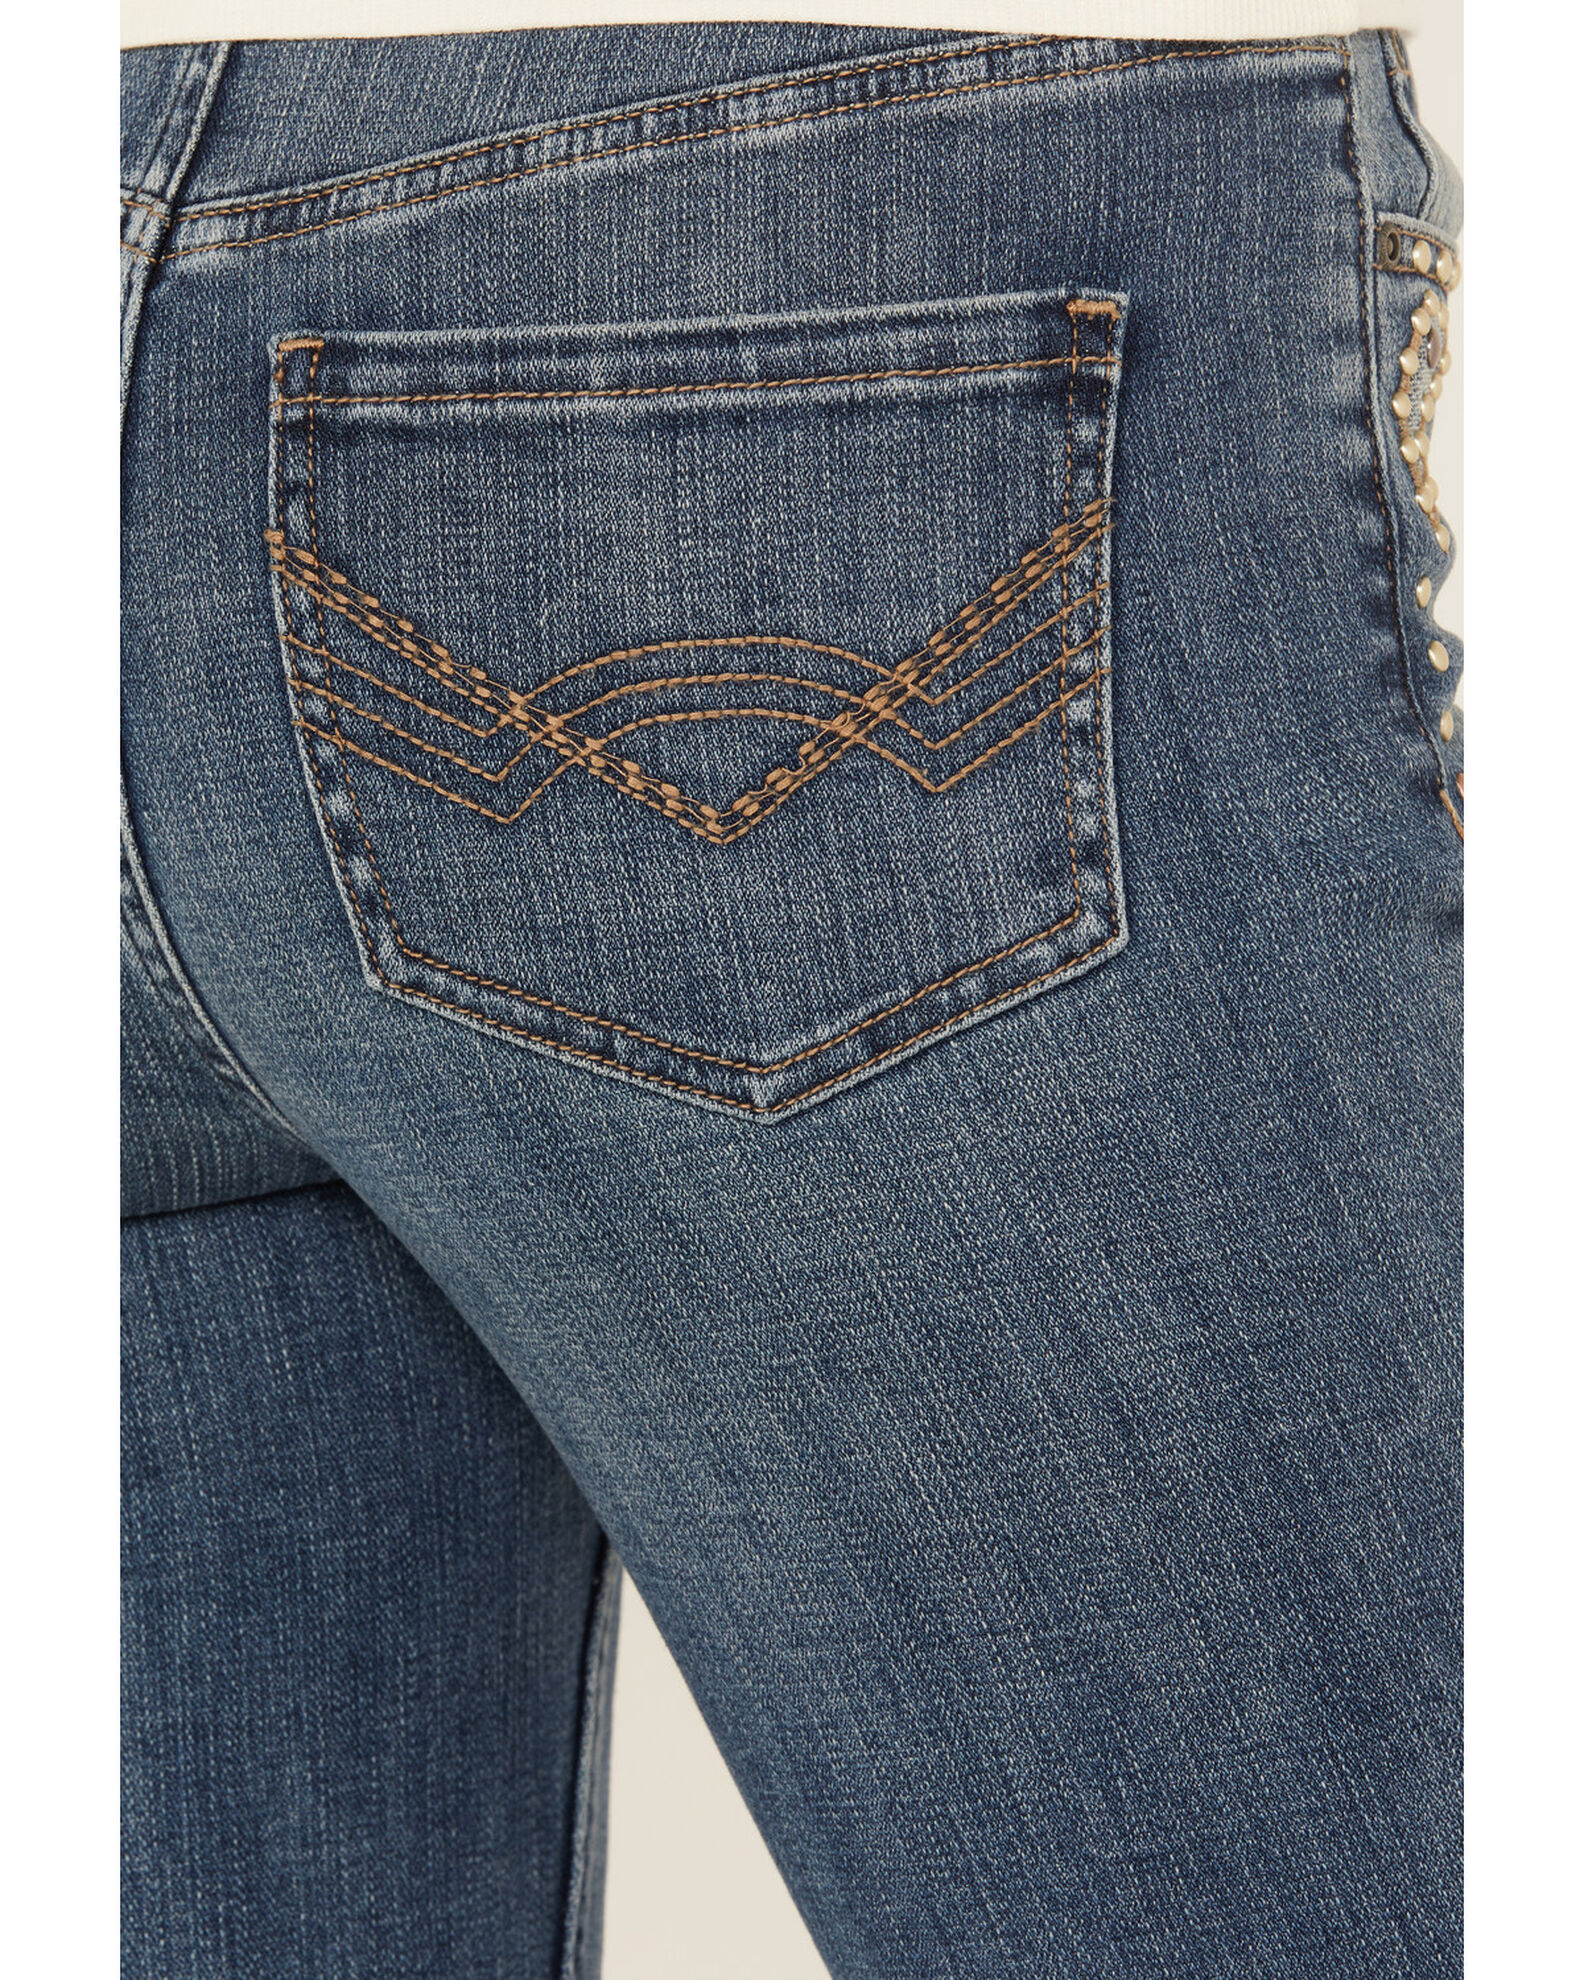 Caliente Distressed Super Flare Jeans *M.A.P* – Rebel Gypsy